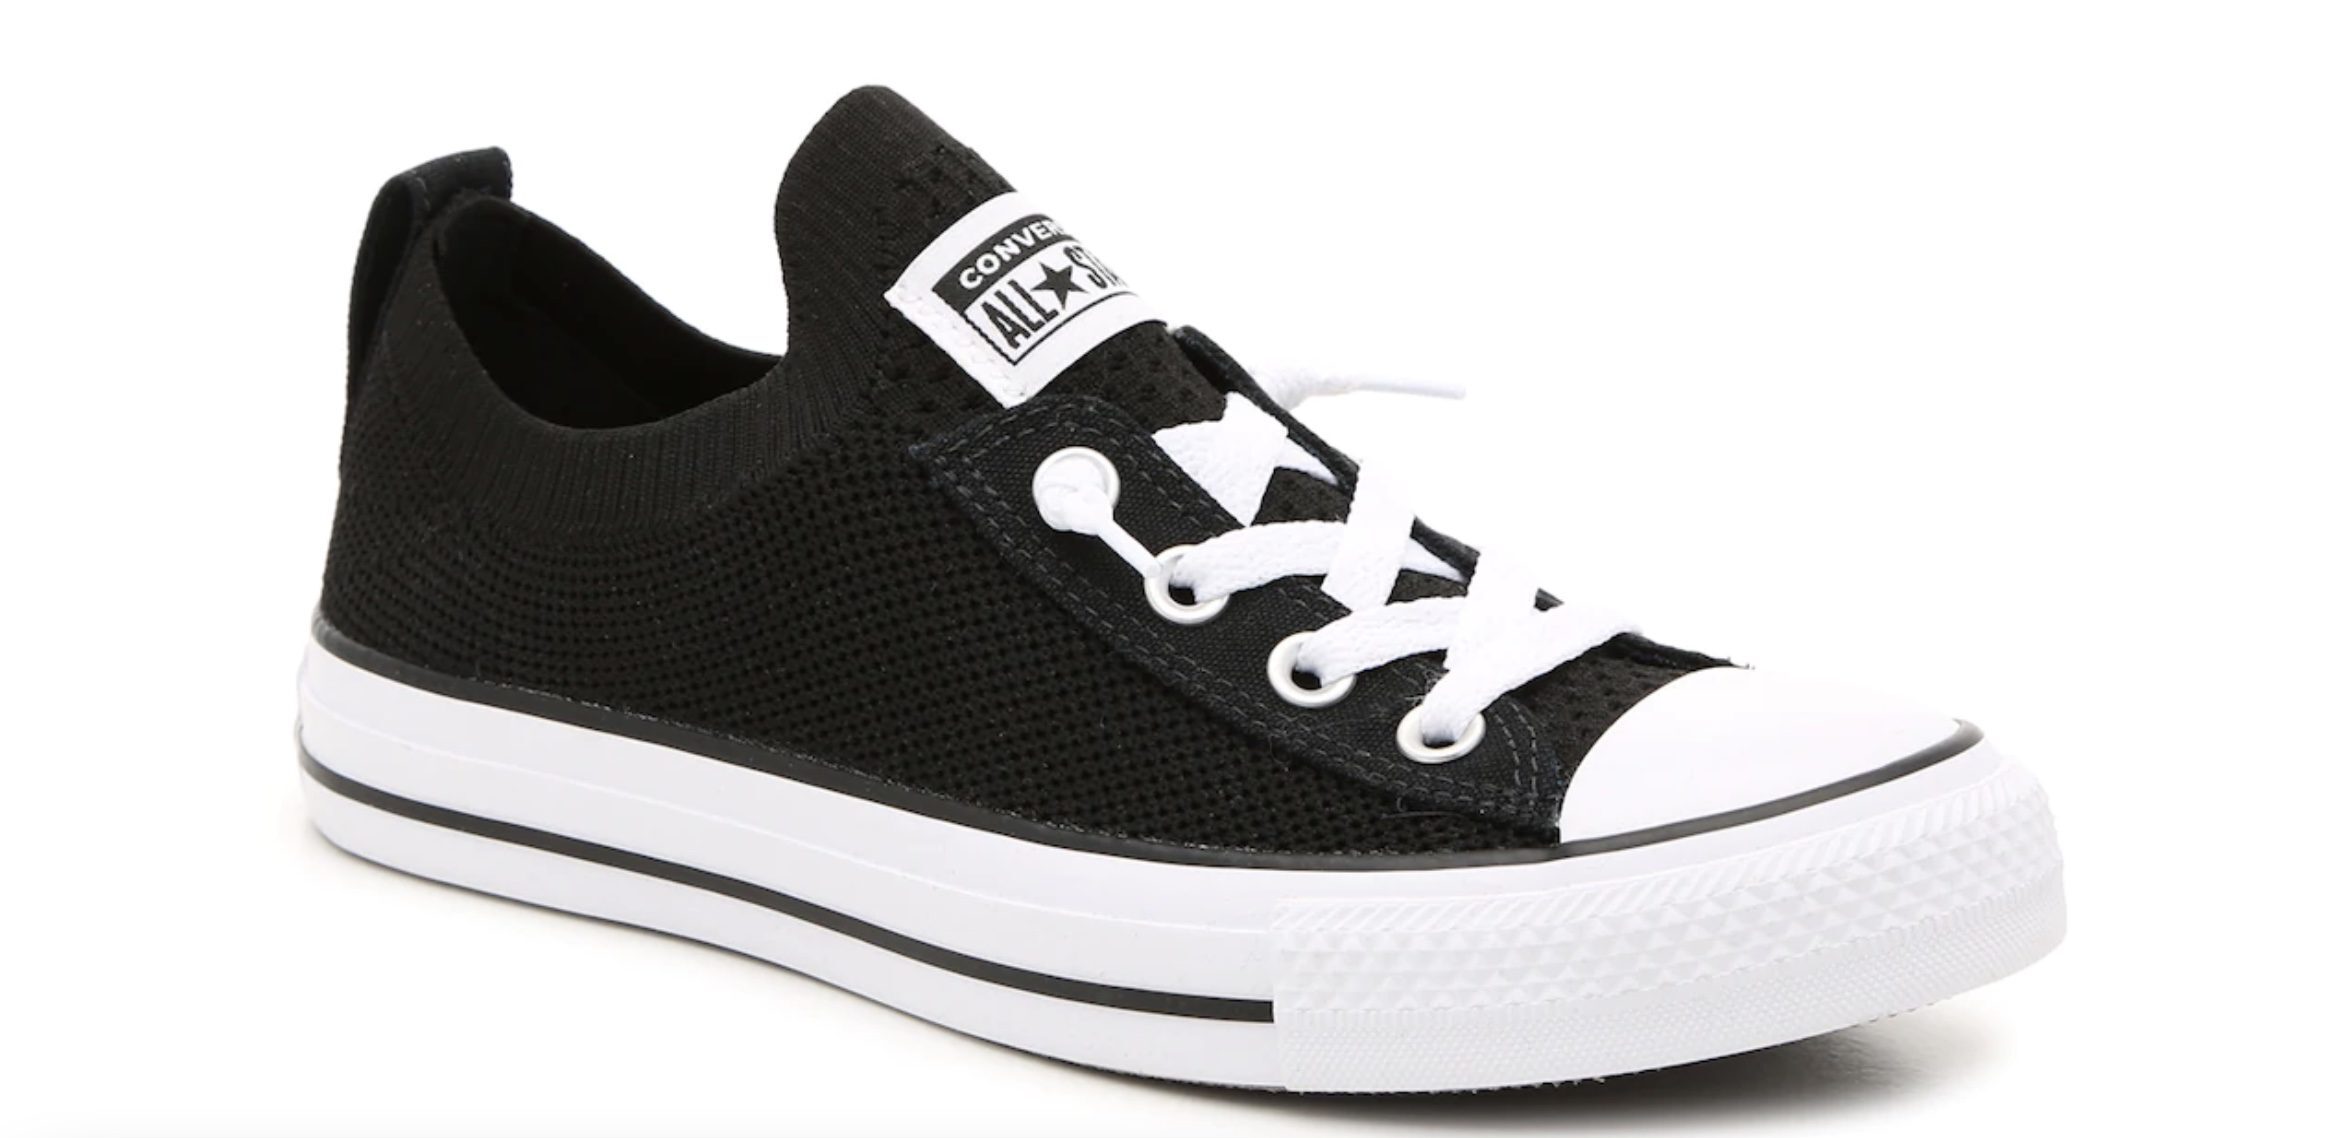 Black Converse slip on shoes